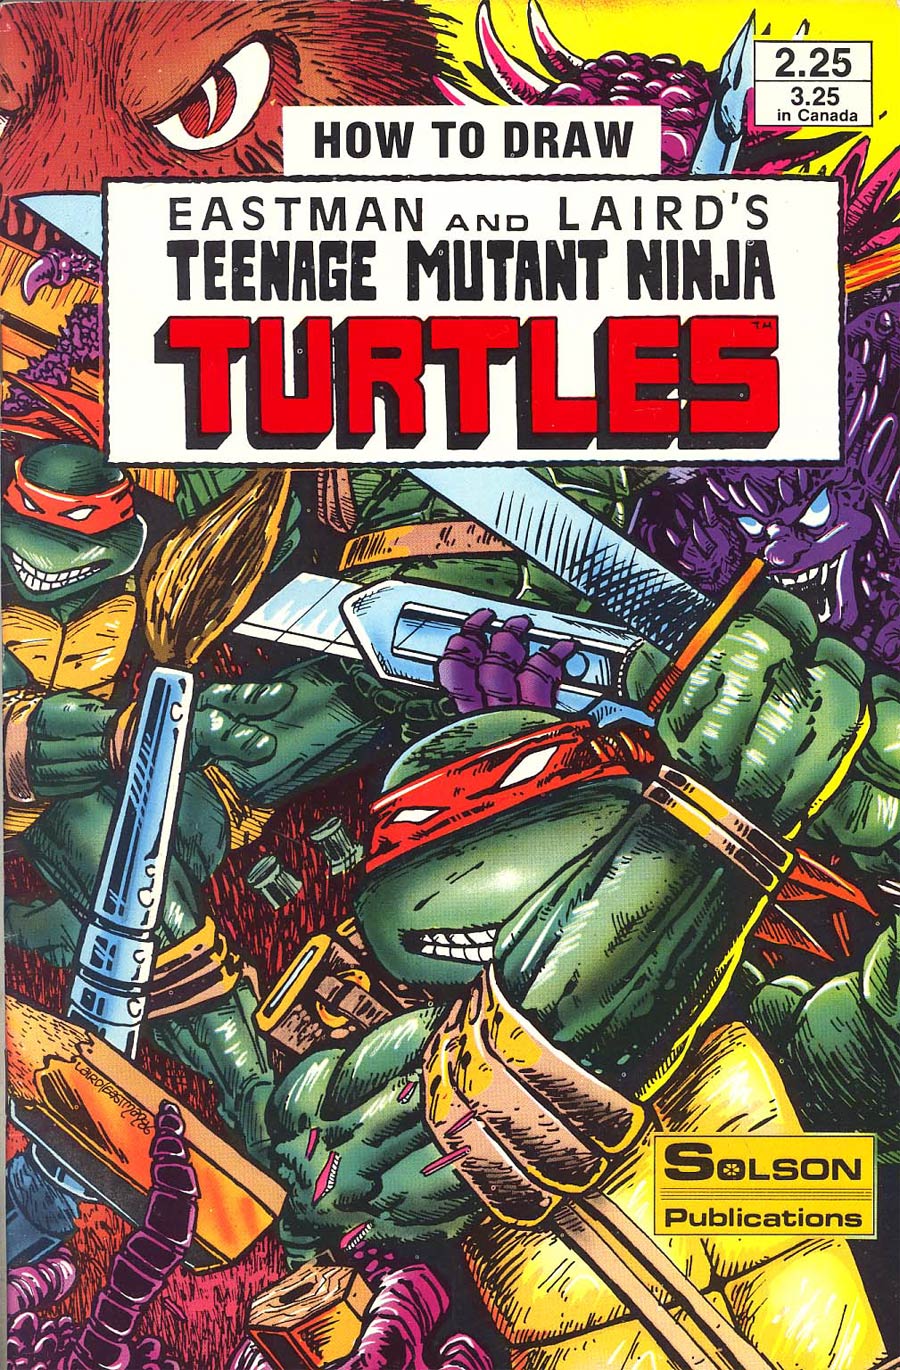 How To Draw Teenage Mutant Ninja Turtles #1